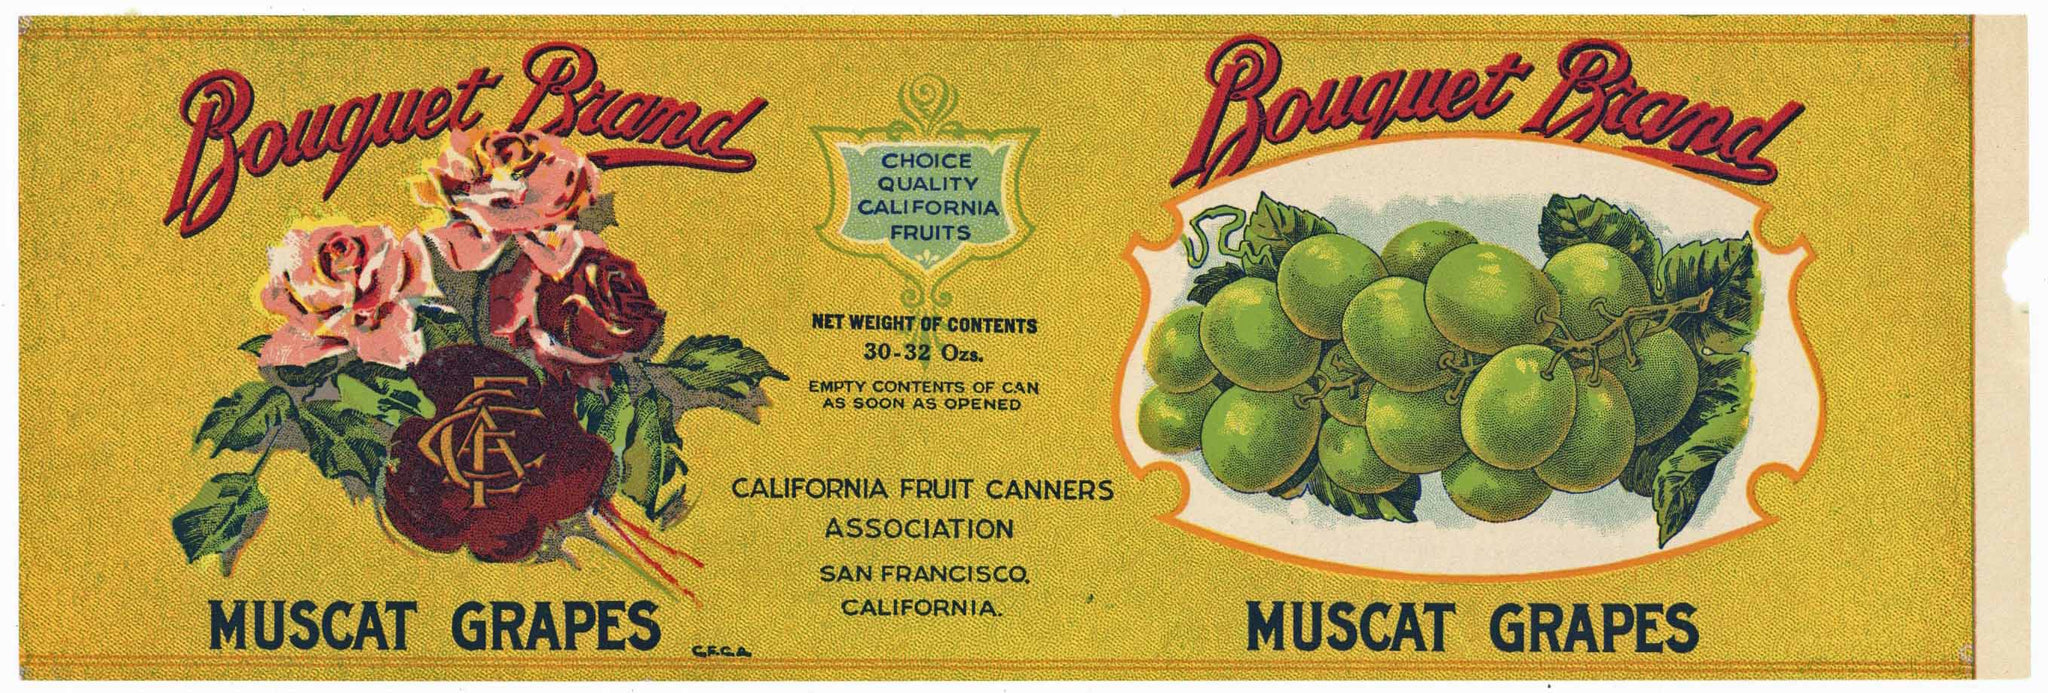 Bouquet Brand Vintage Muscat Grapes Can Label